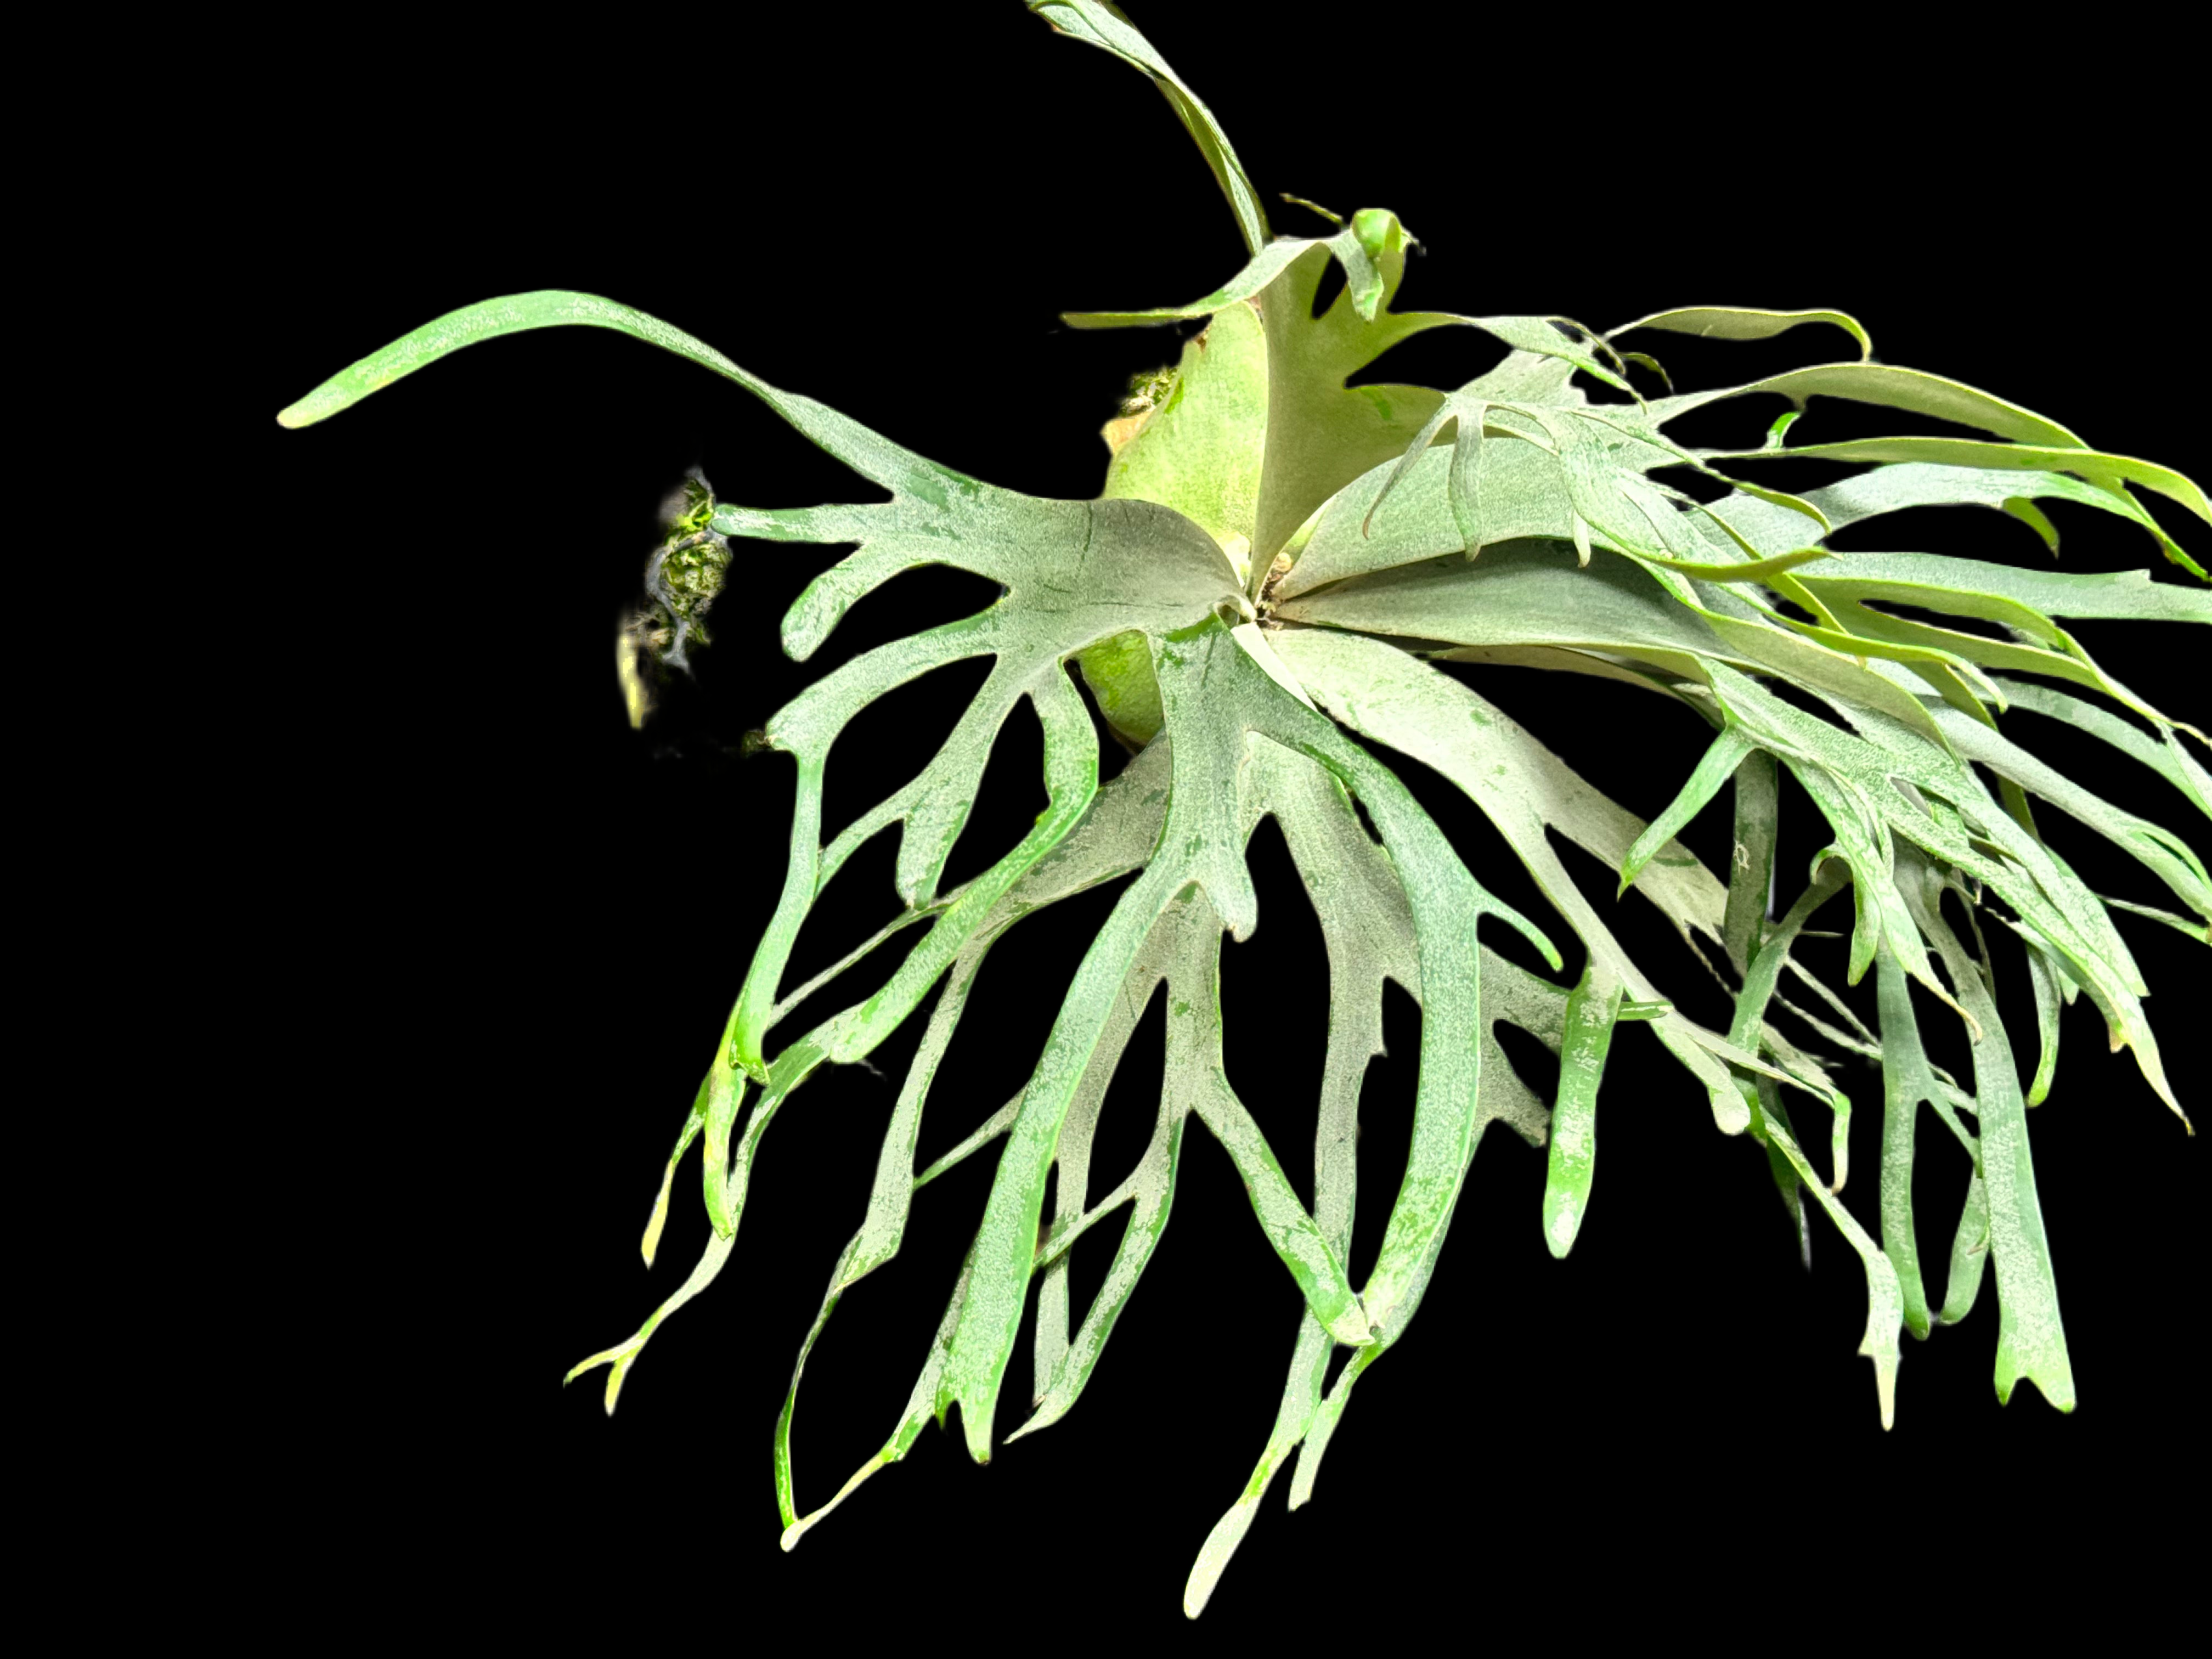 Platycerium willinckii "Jade Girl"